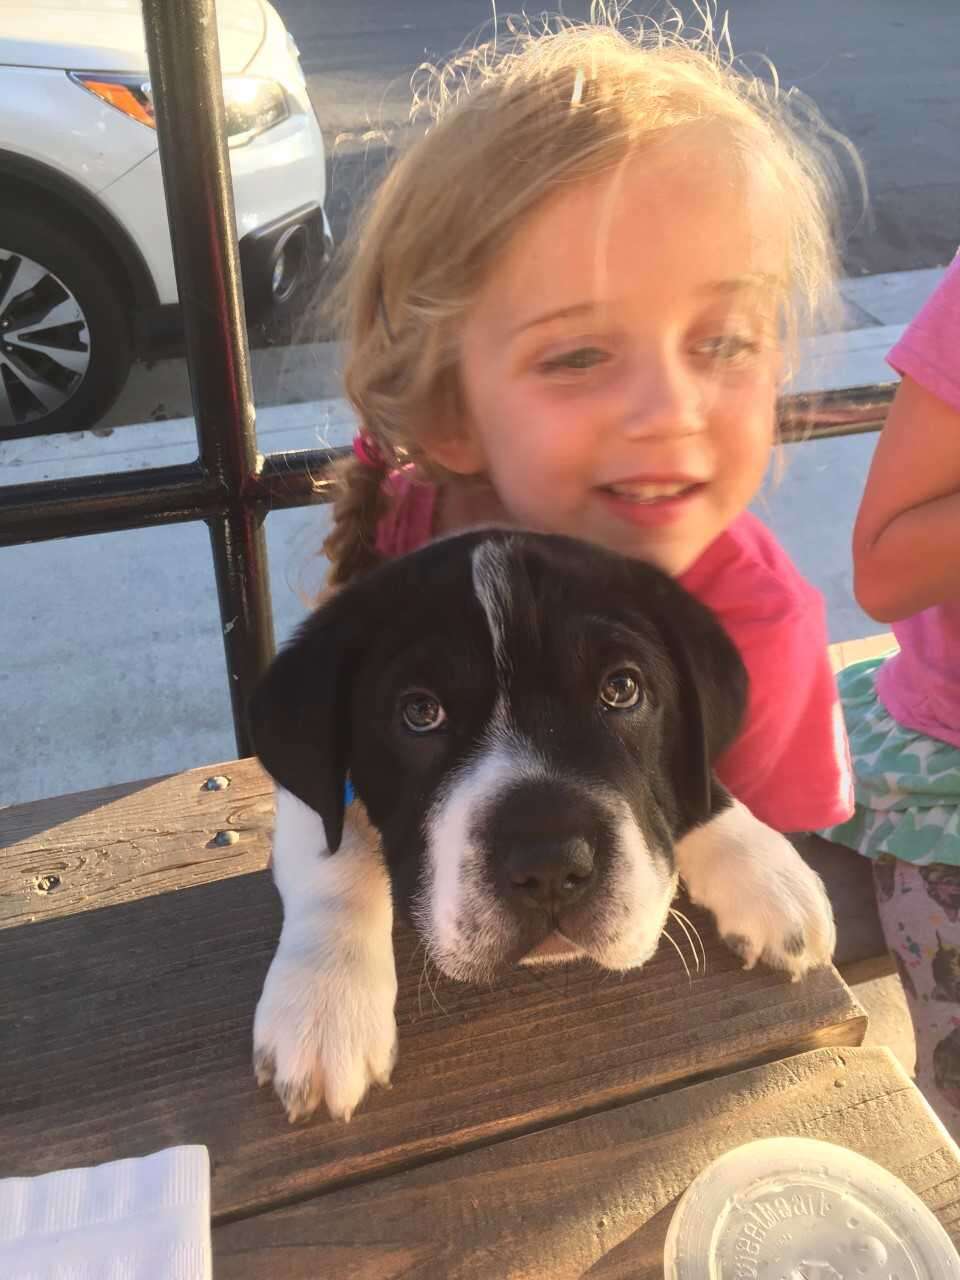 Little girl holding puppy